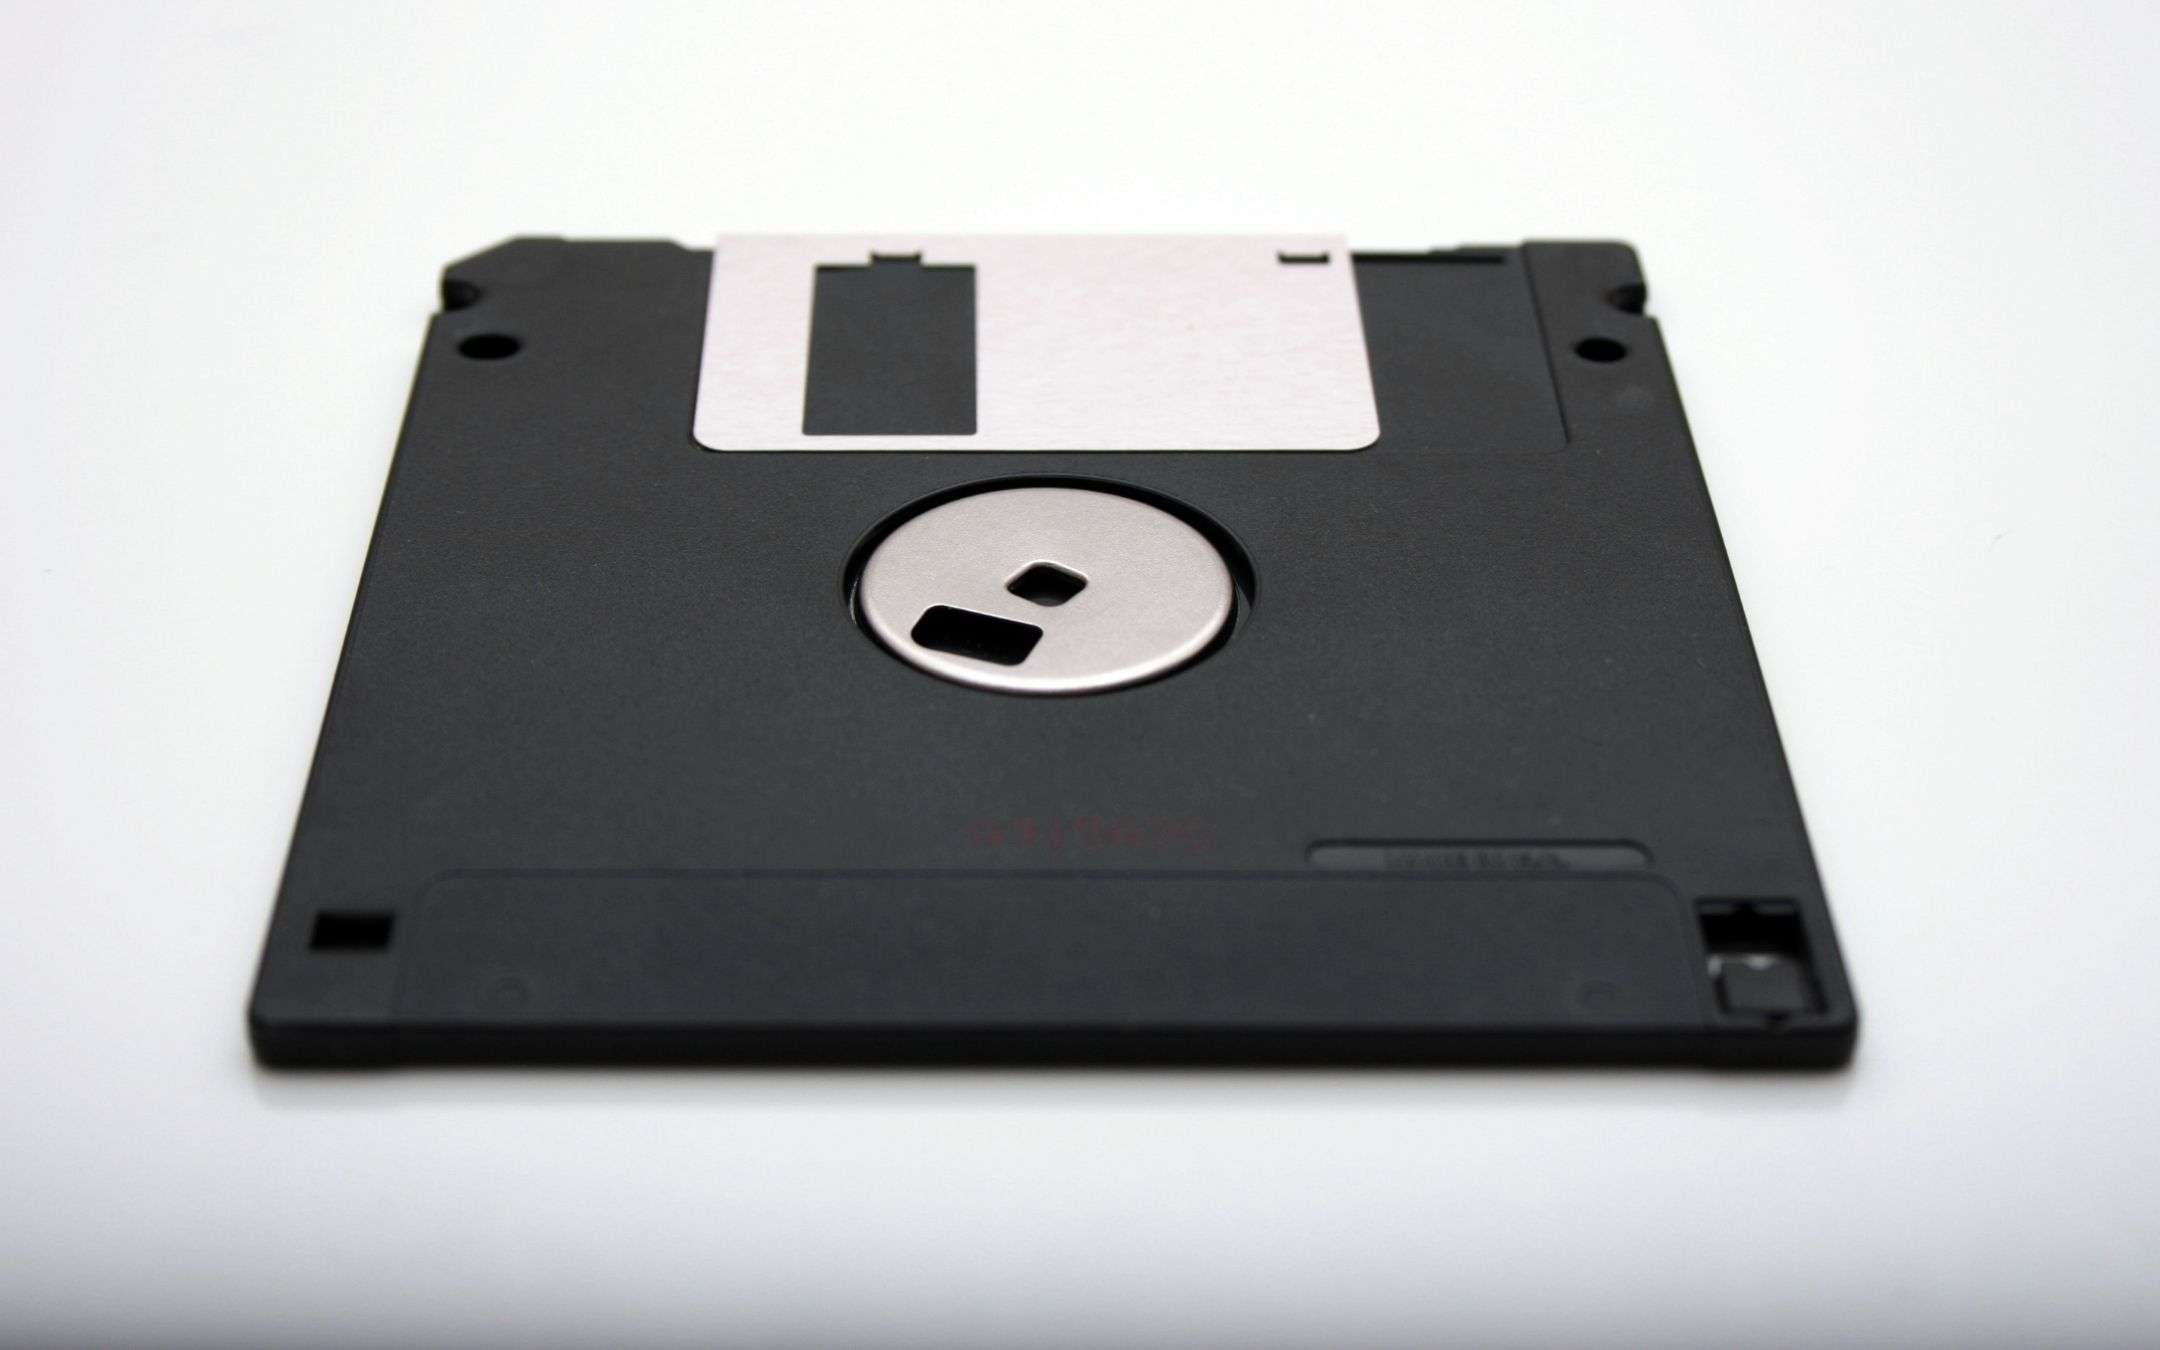 iPhone può leggere floppy disk e CD (VIDEO)